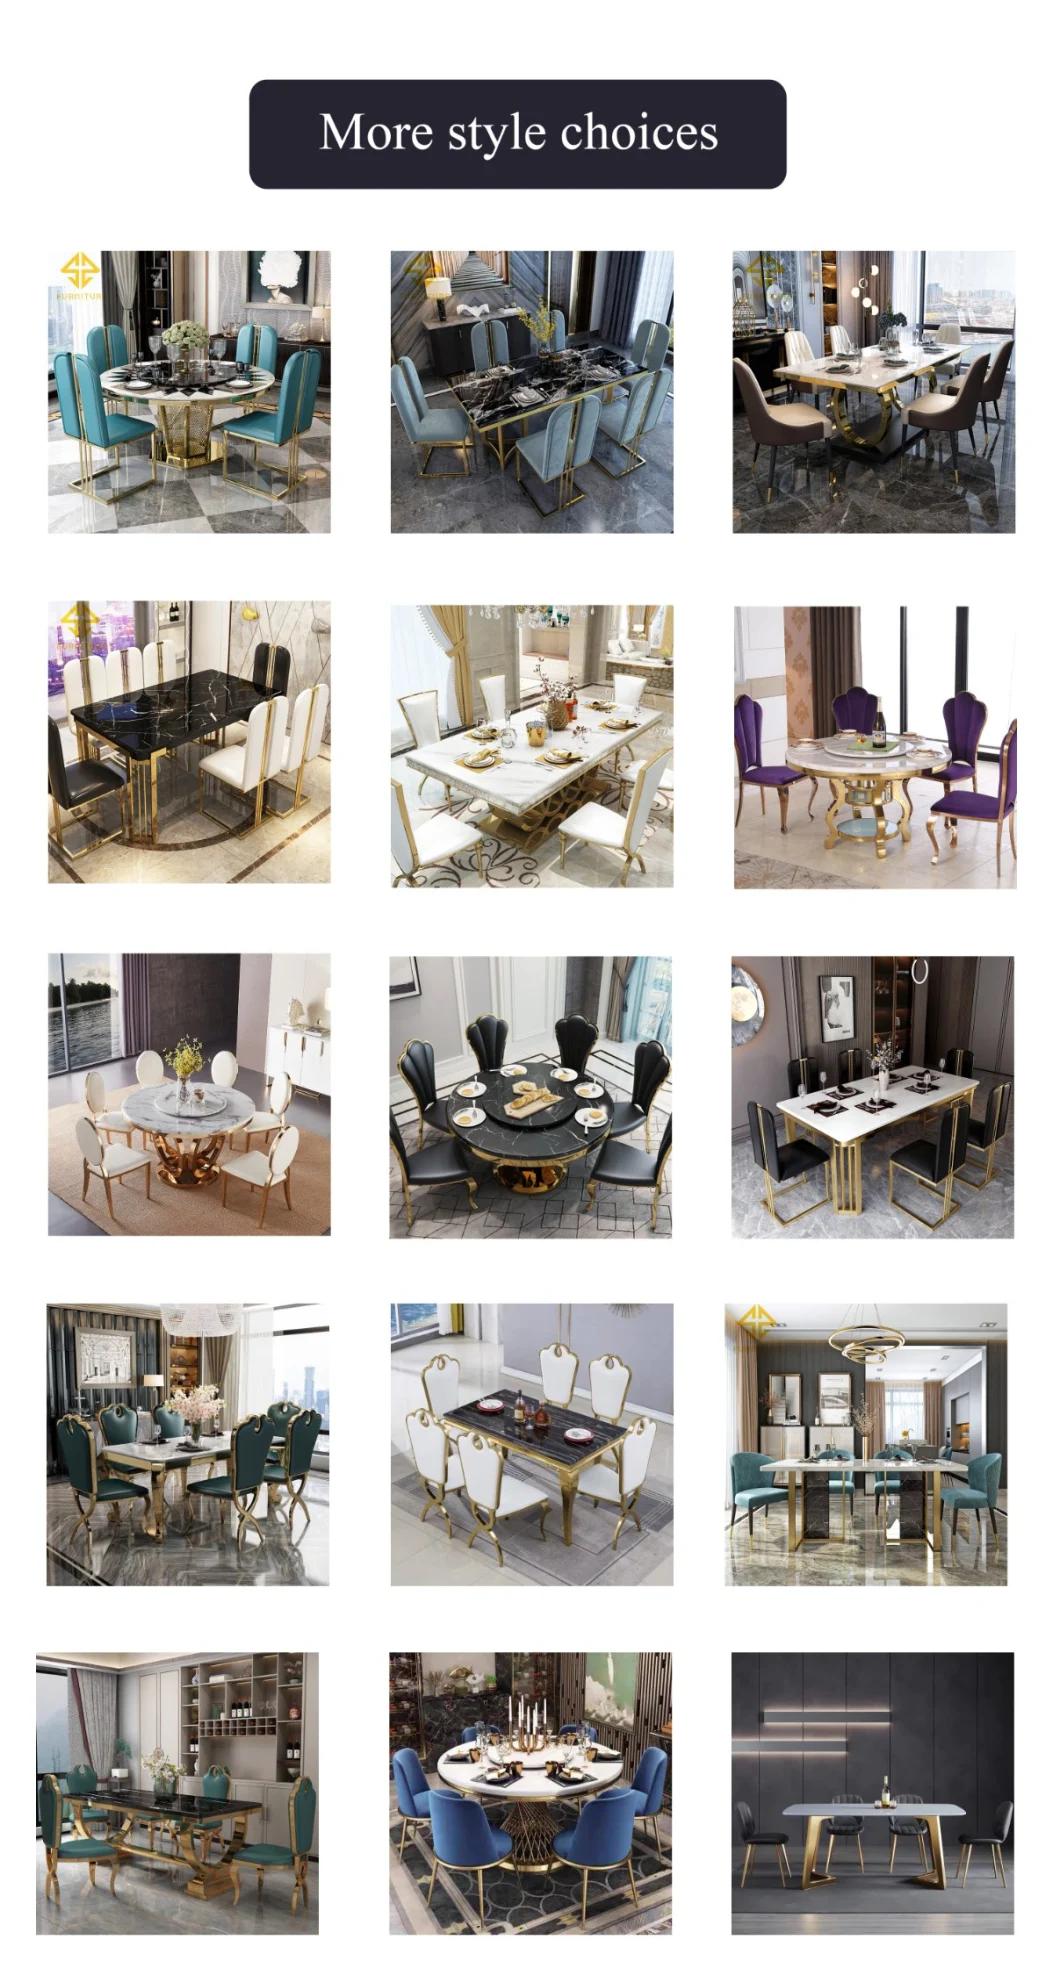 Hot Sale Hotel Banquet Gold Tiffany Chiavari Chair for Outdoor Wedding Banquet Chair